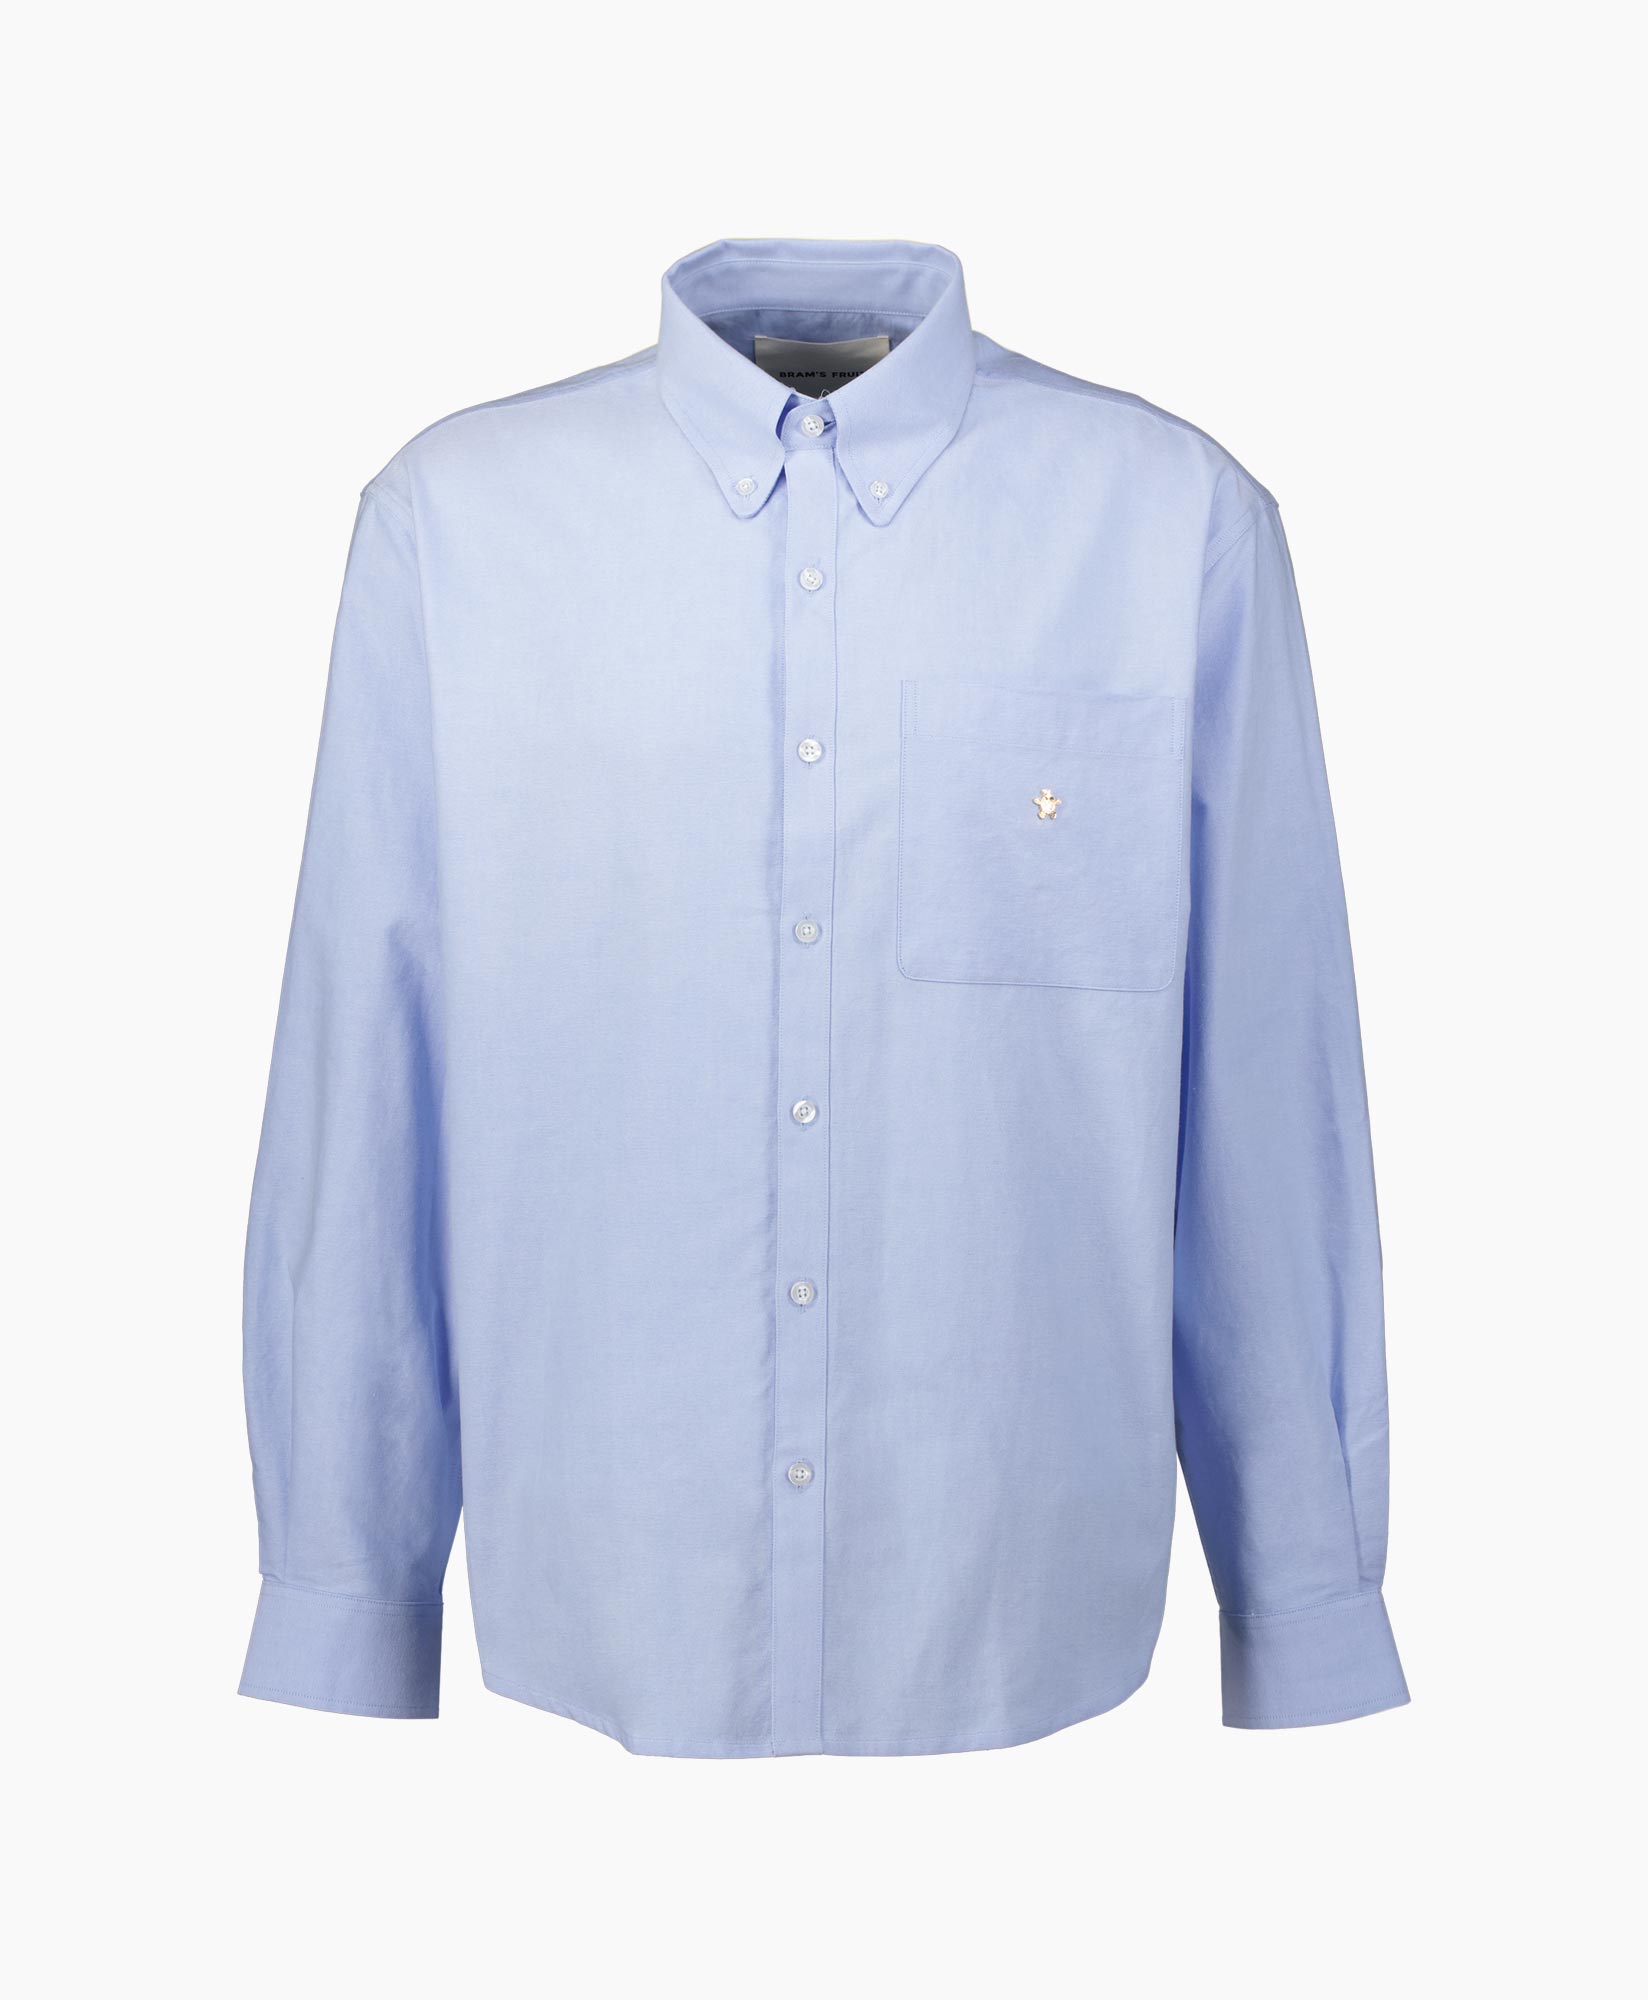 Overhemd Oxford Shirt Blauw